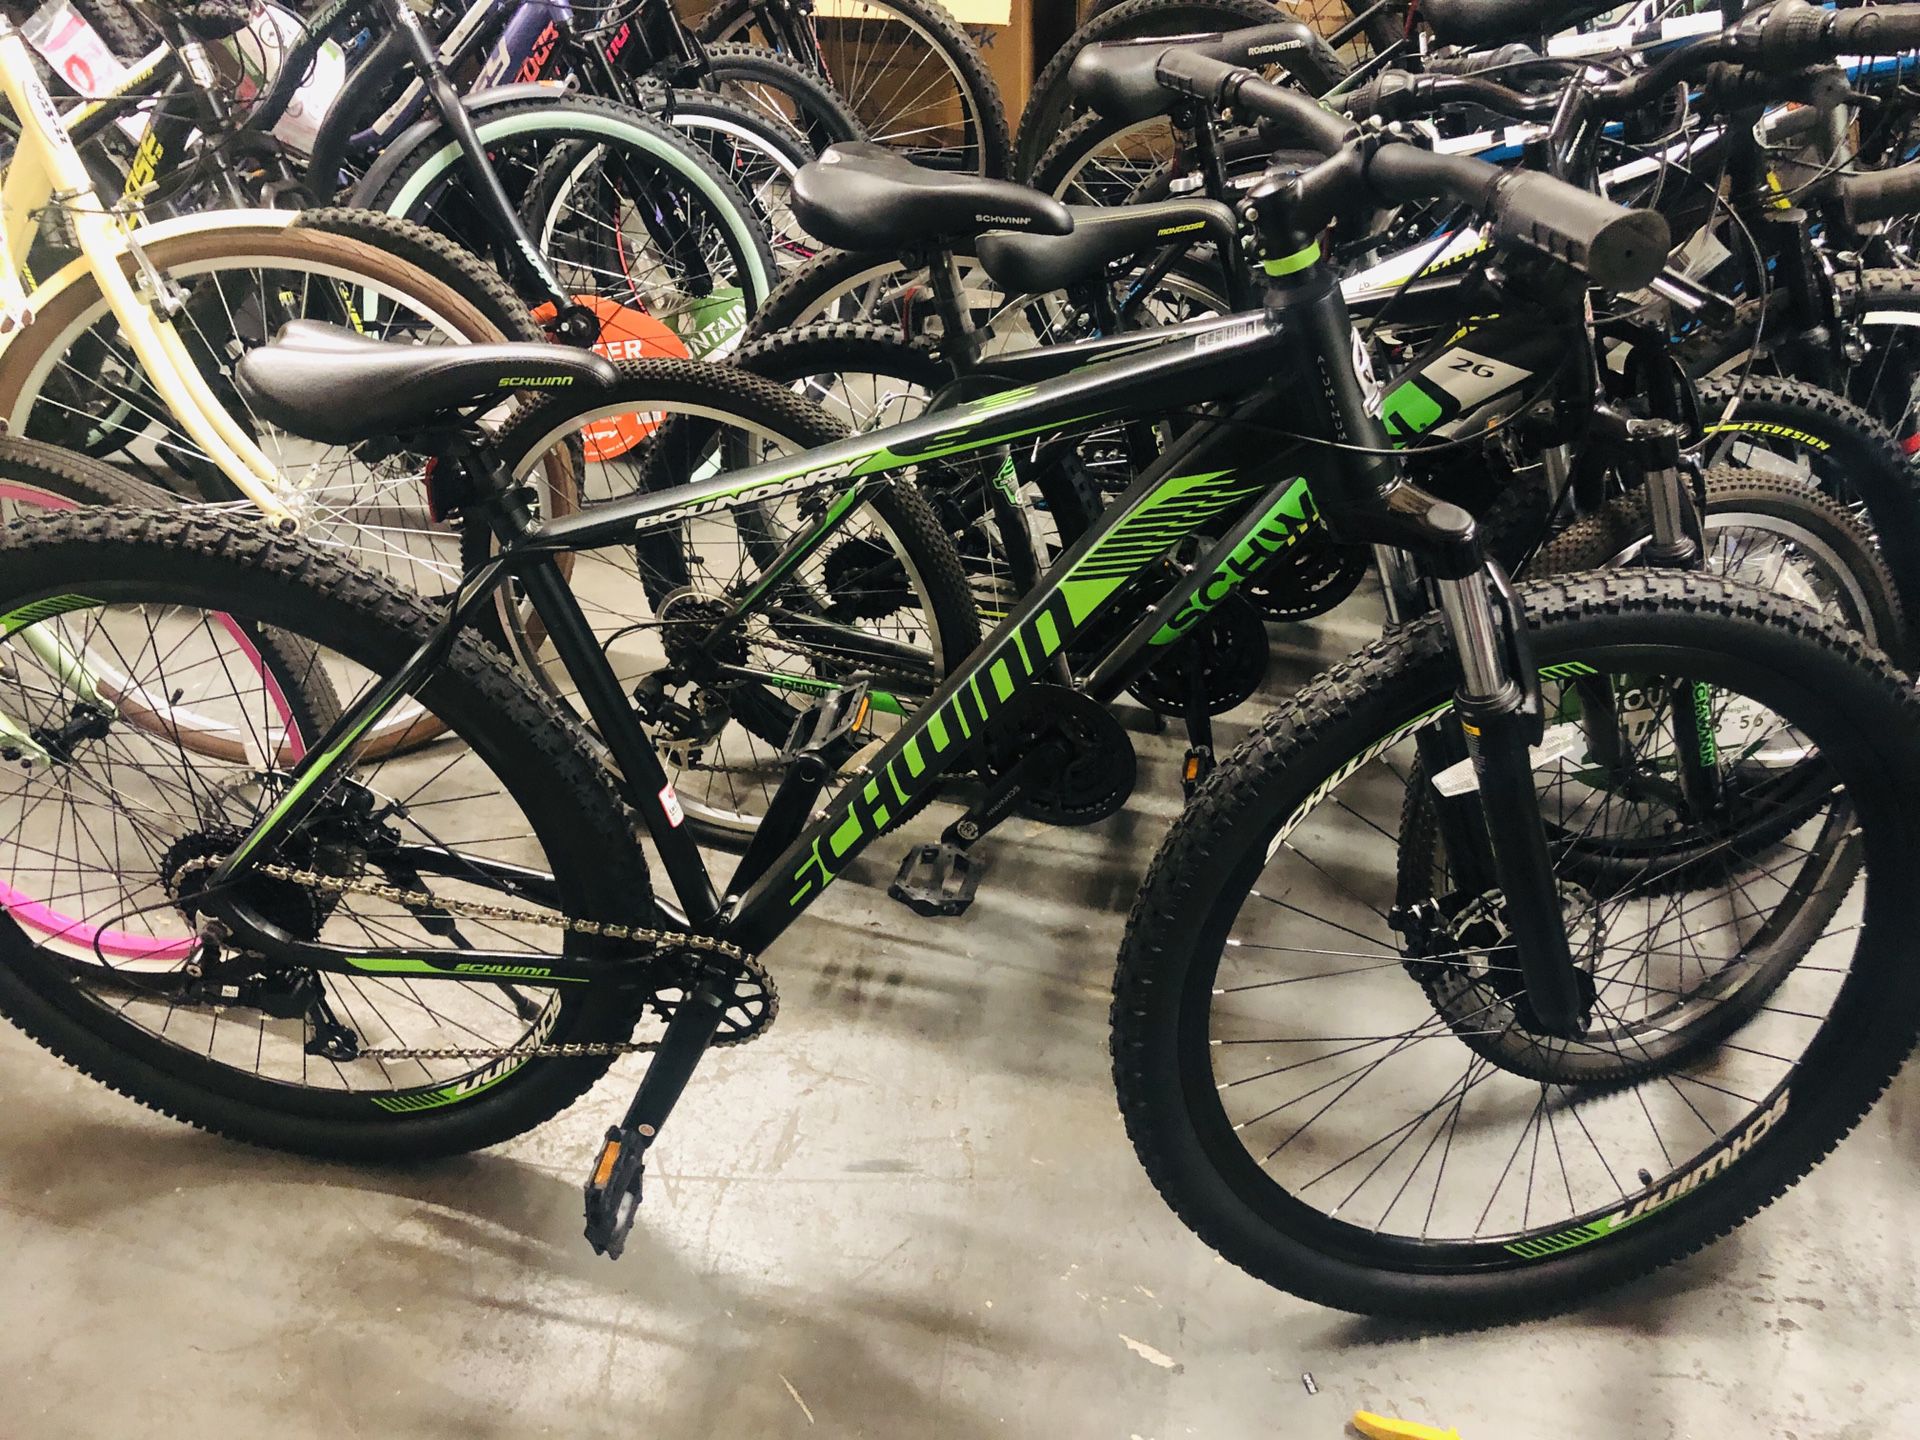 Schwinn Boundary Men's Mountain Bike, 29-inch wheels, 21 speeds, Dark Green and Black